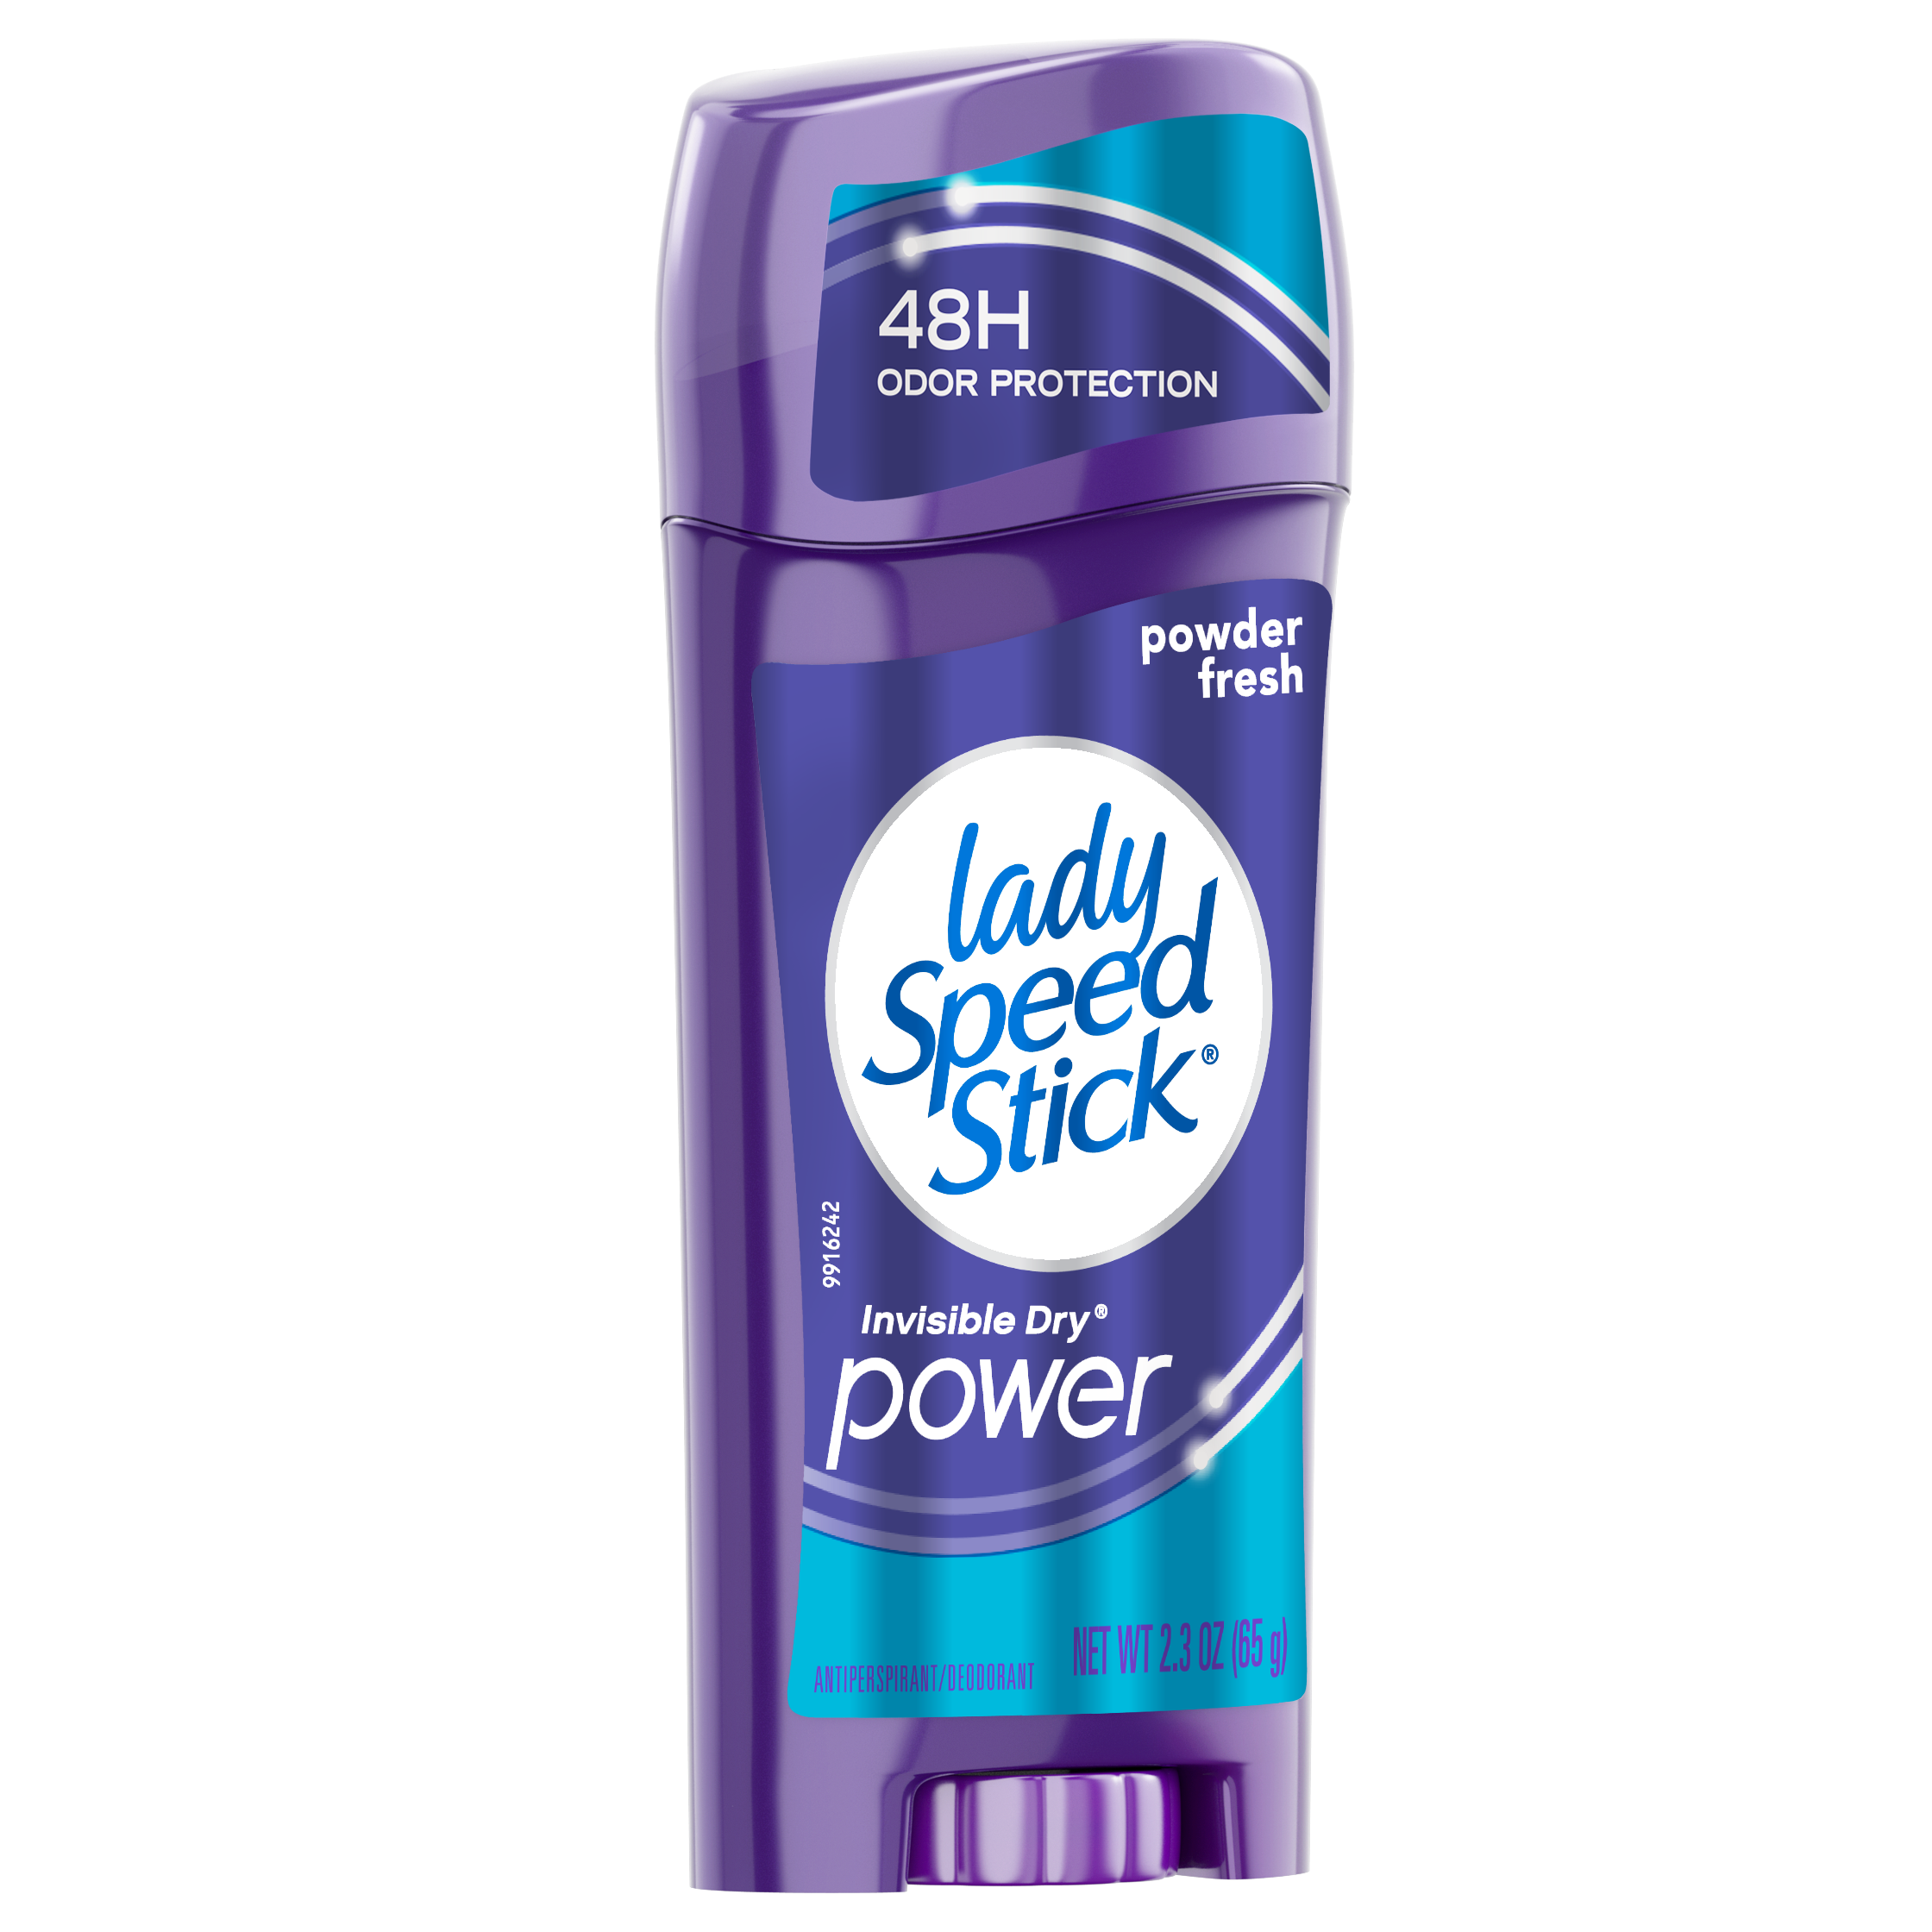 Lady Speed Stick, Invisible Dry Power Antiperspirant Female Deodorant, Powder Fresh, 2.3 oz - image 2 of 4